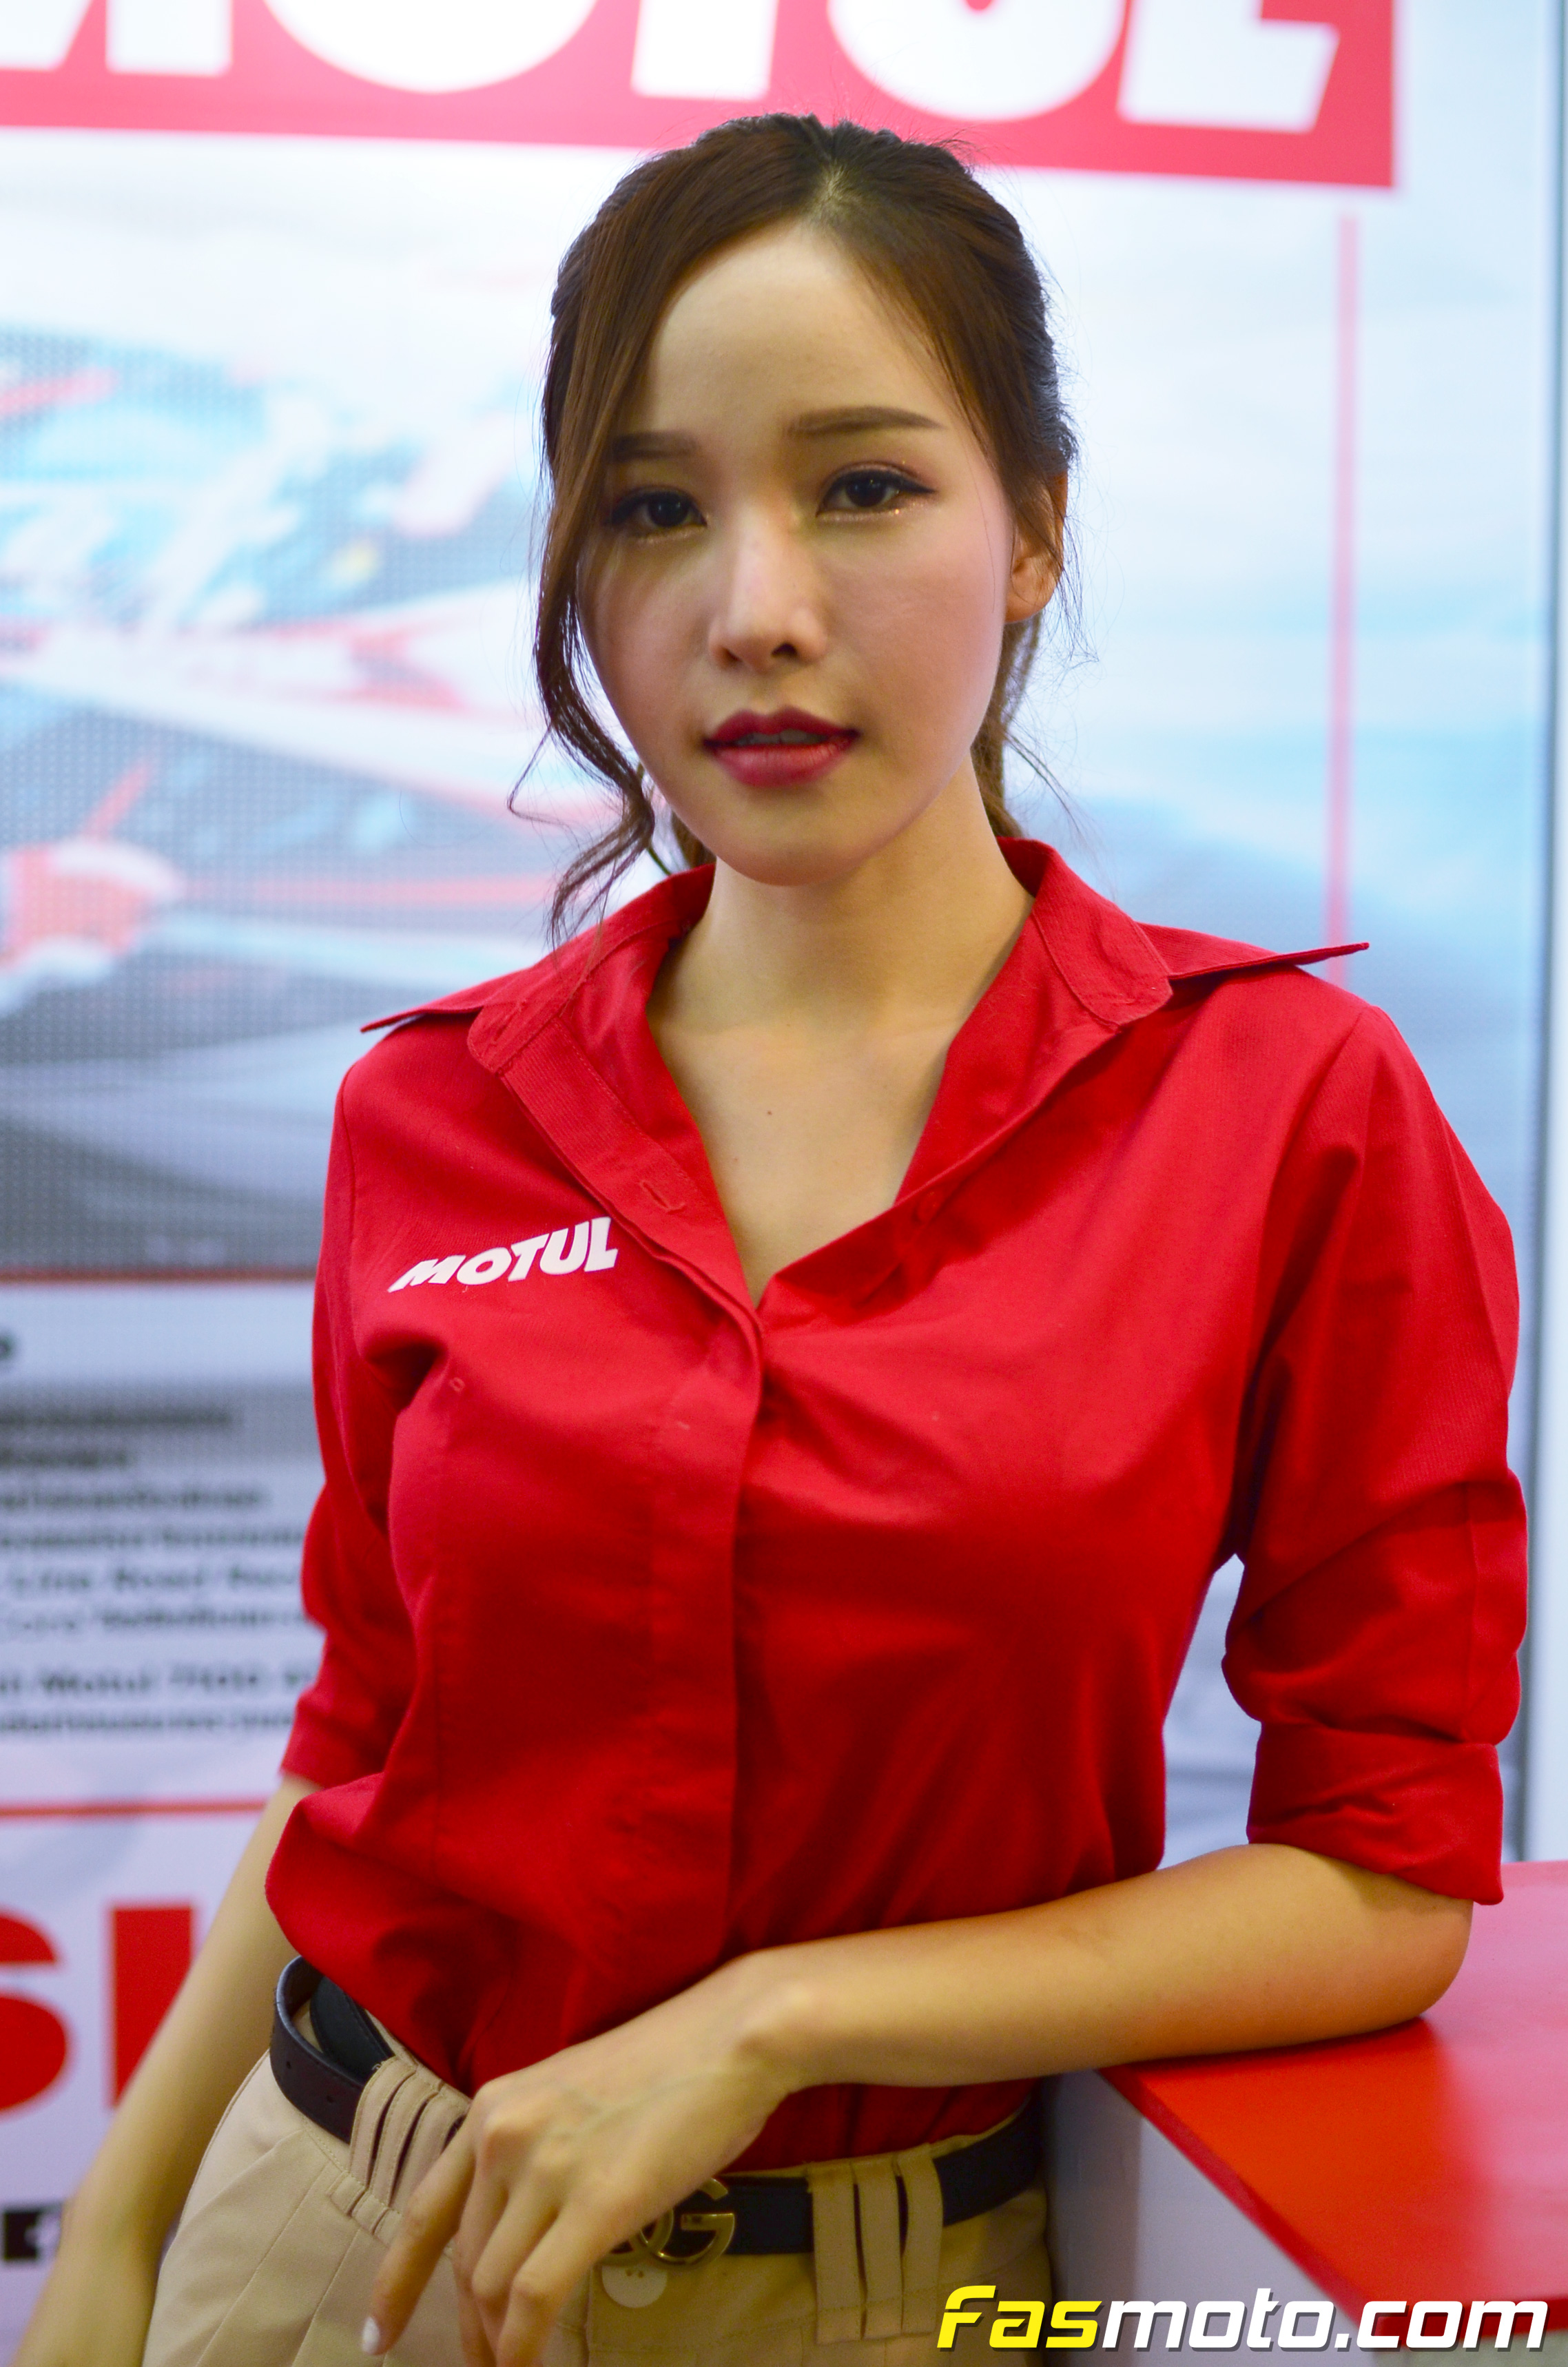 The Bangkok Motor Show 2019 - Show Girls - Motul